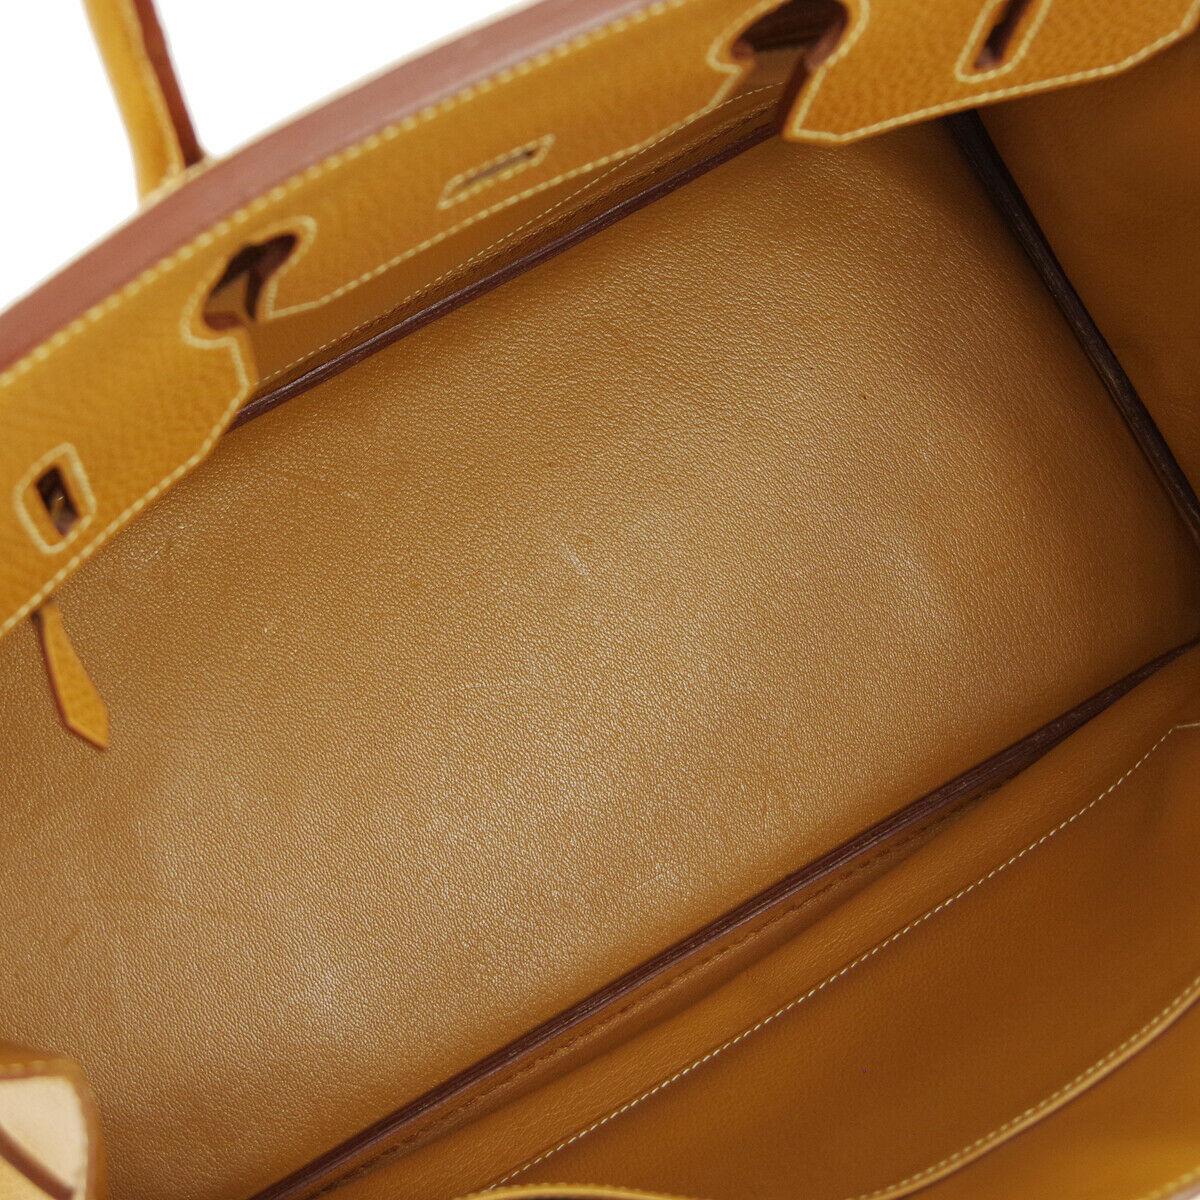 Hermes Birkin 35 Cognac Leather Gold Top Carryall Handle Satchel Travel Tote Bag 2